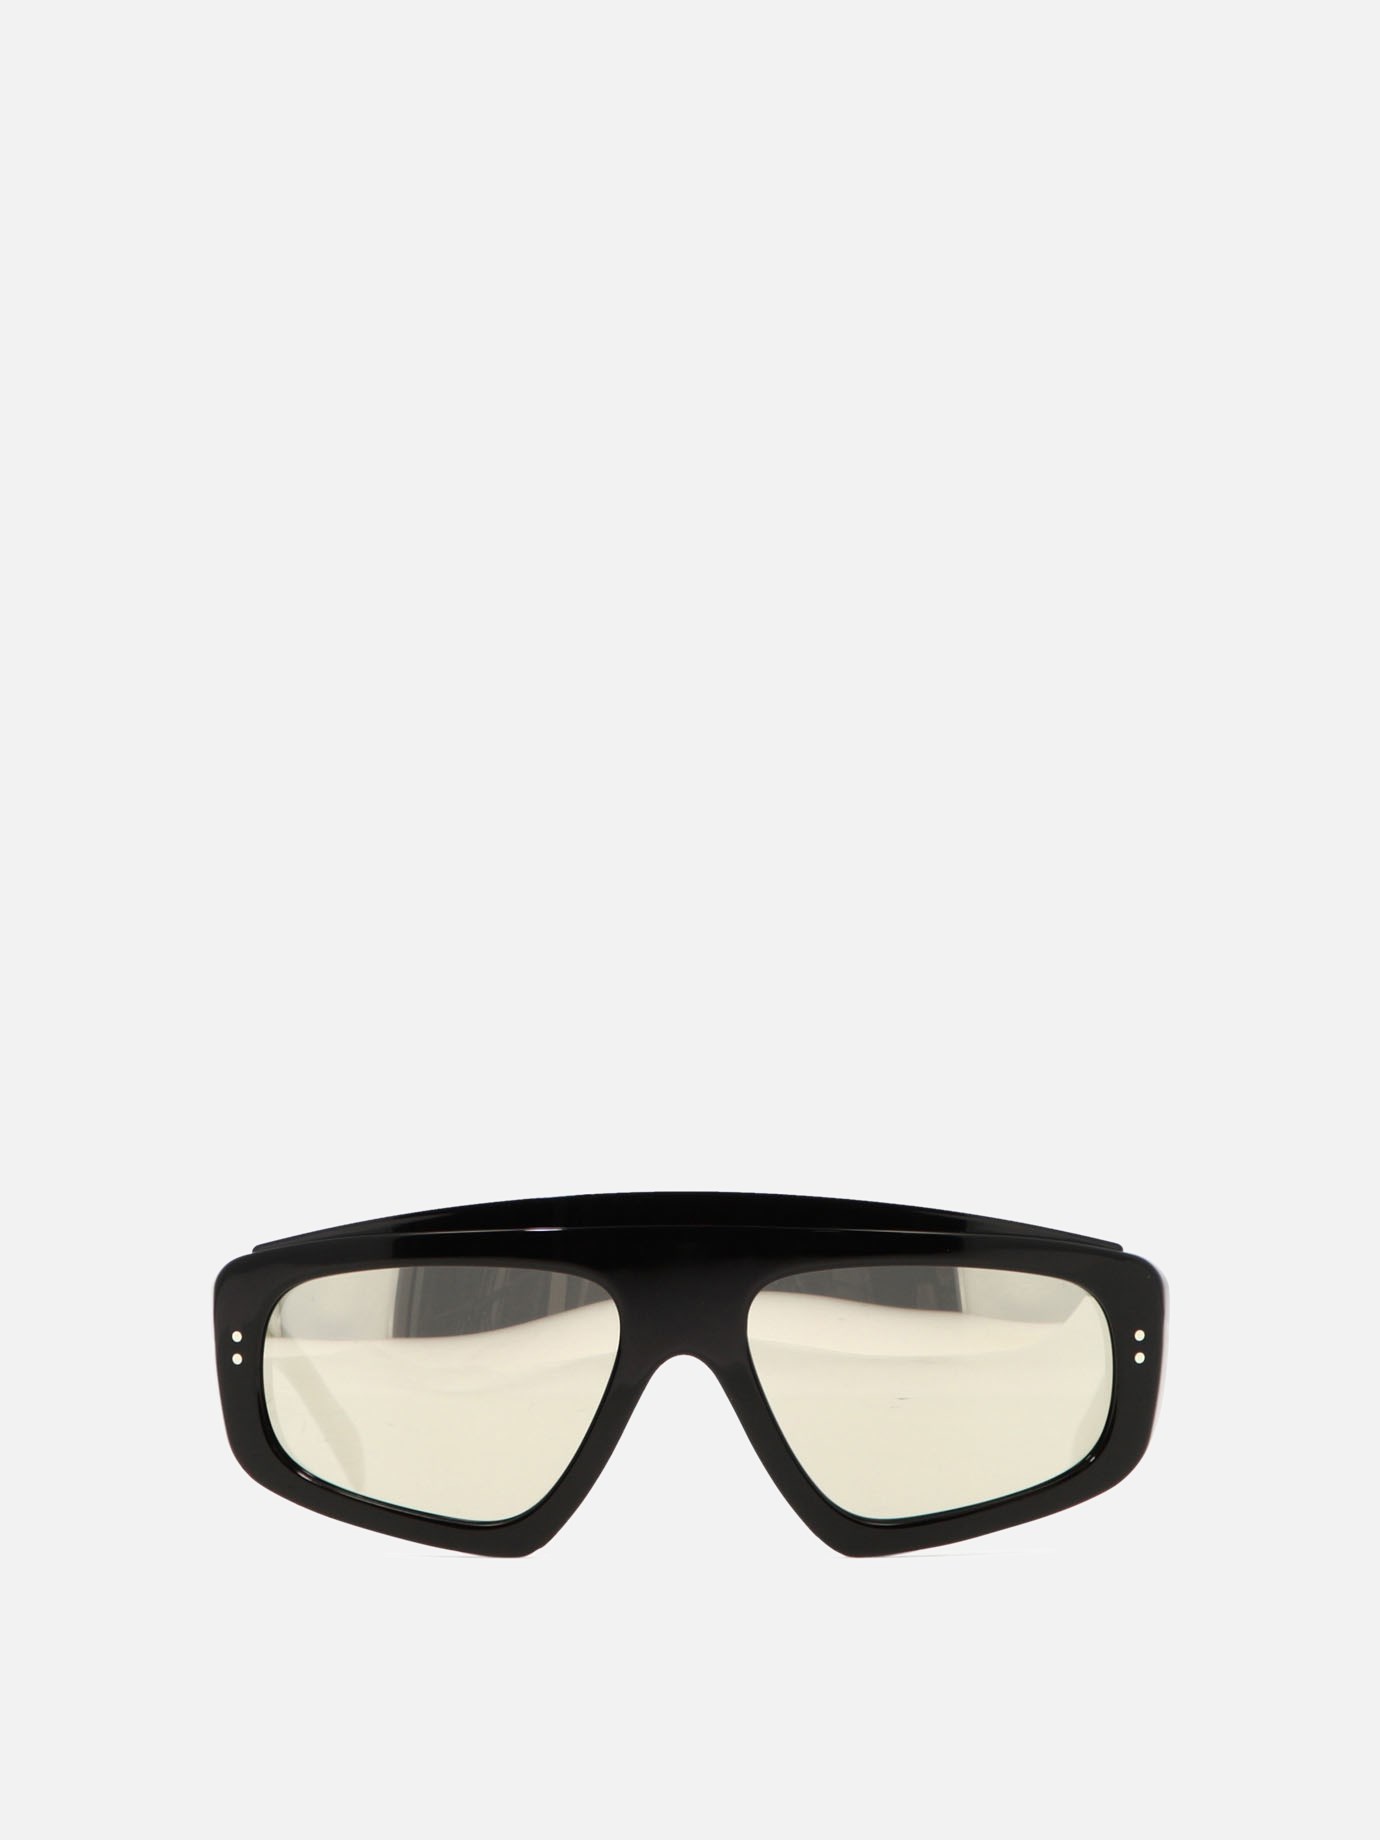  Black Frame 34  sunglasses by Celine